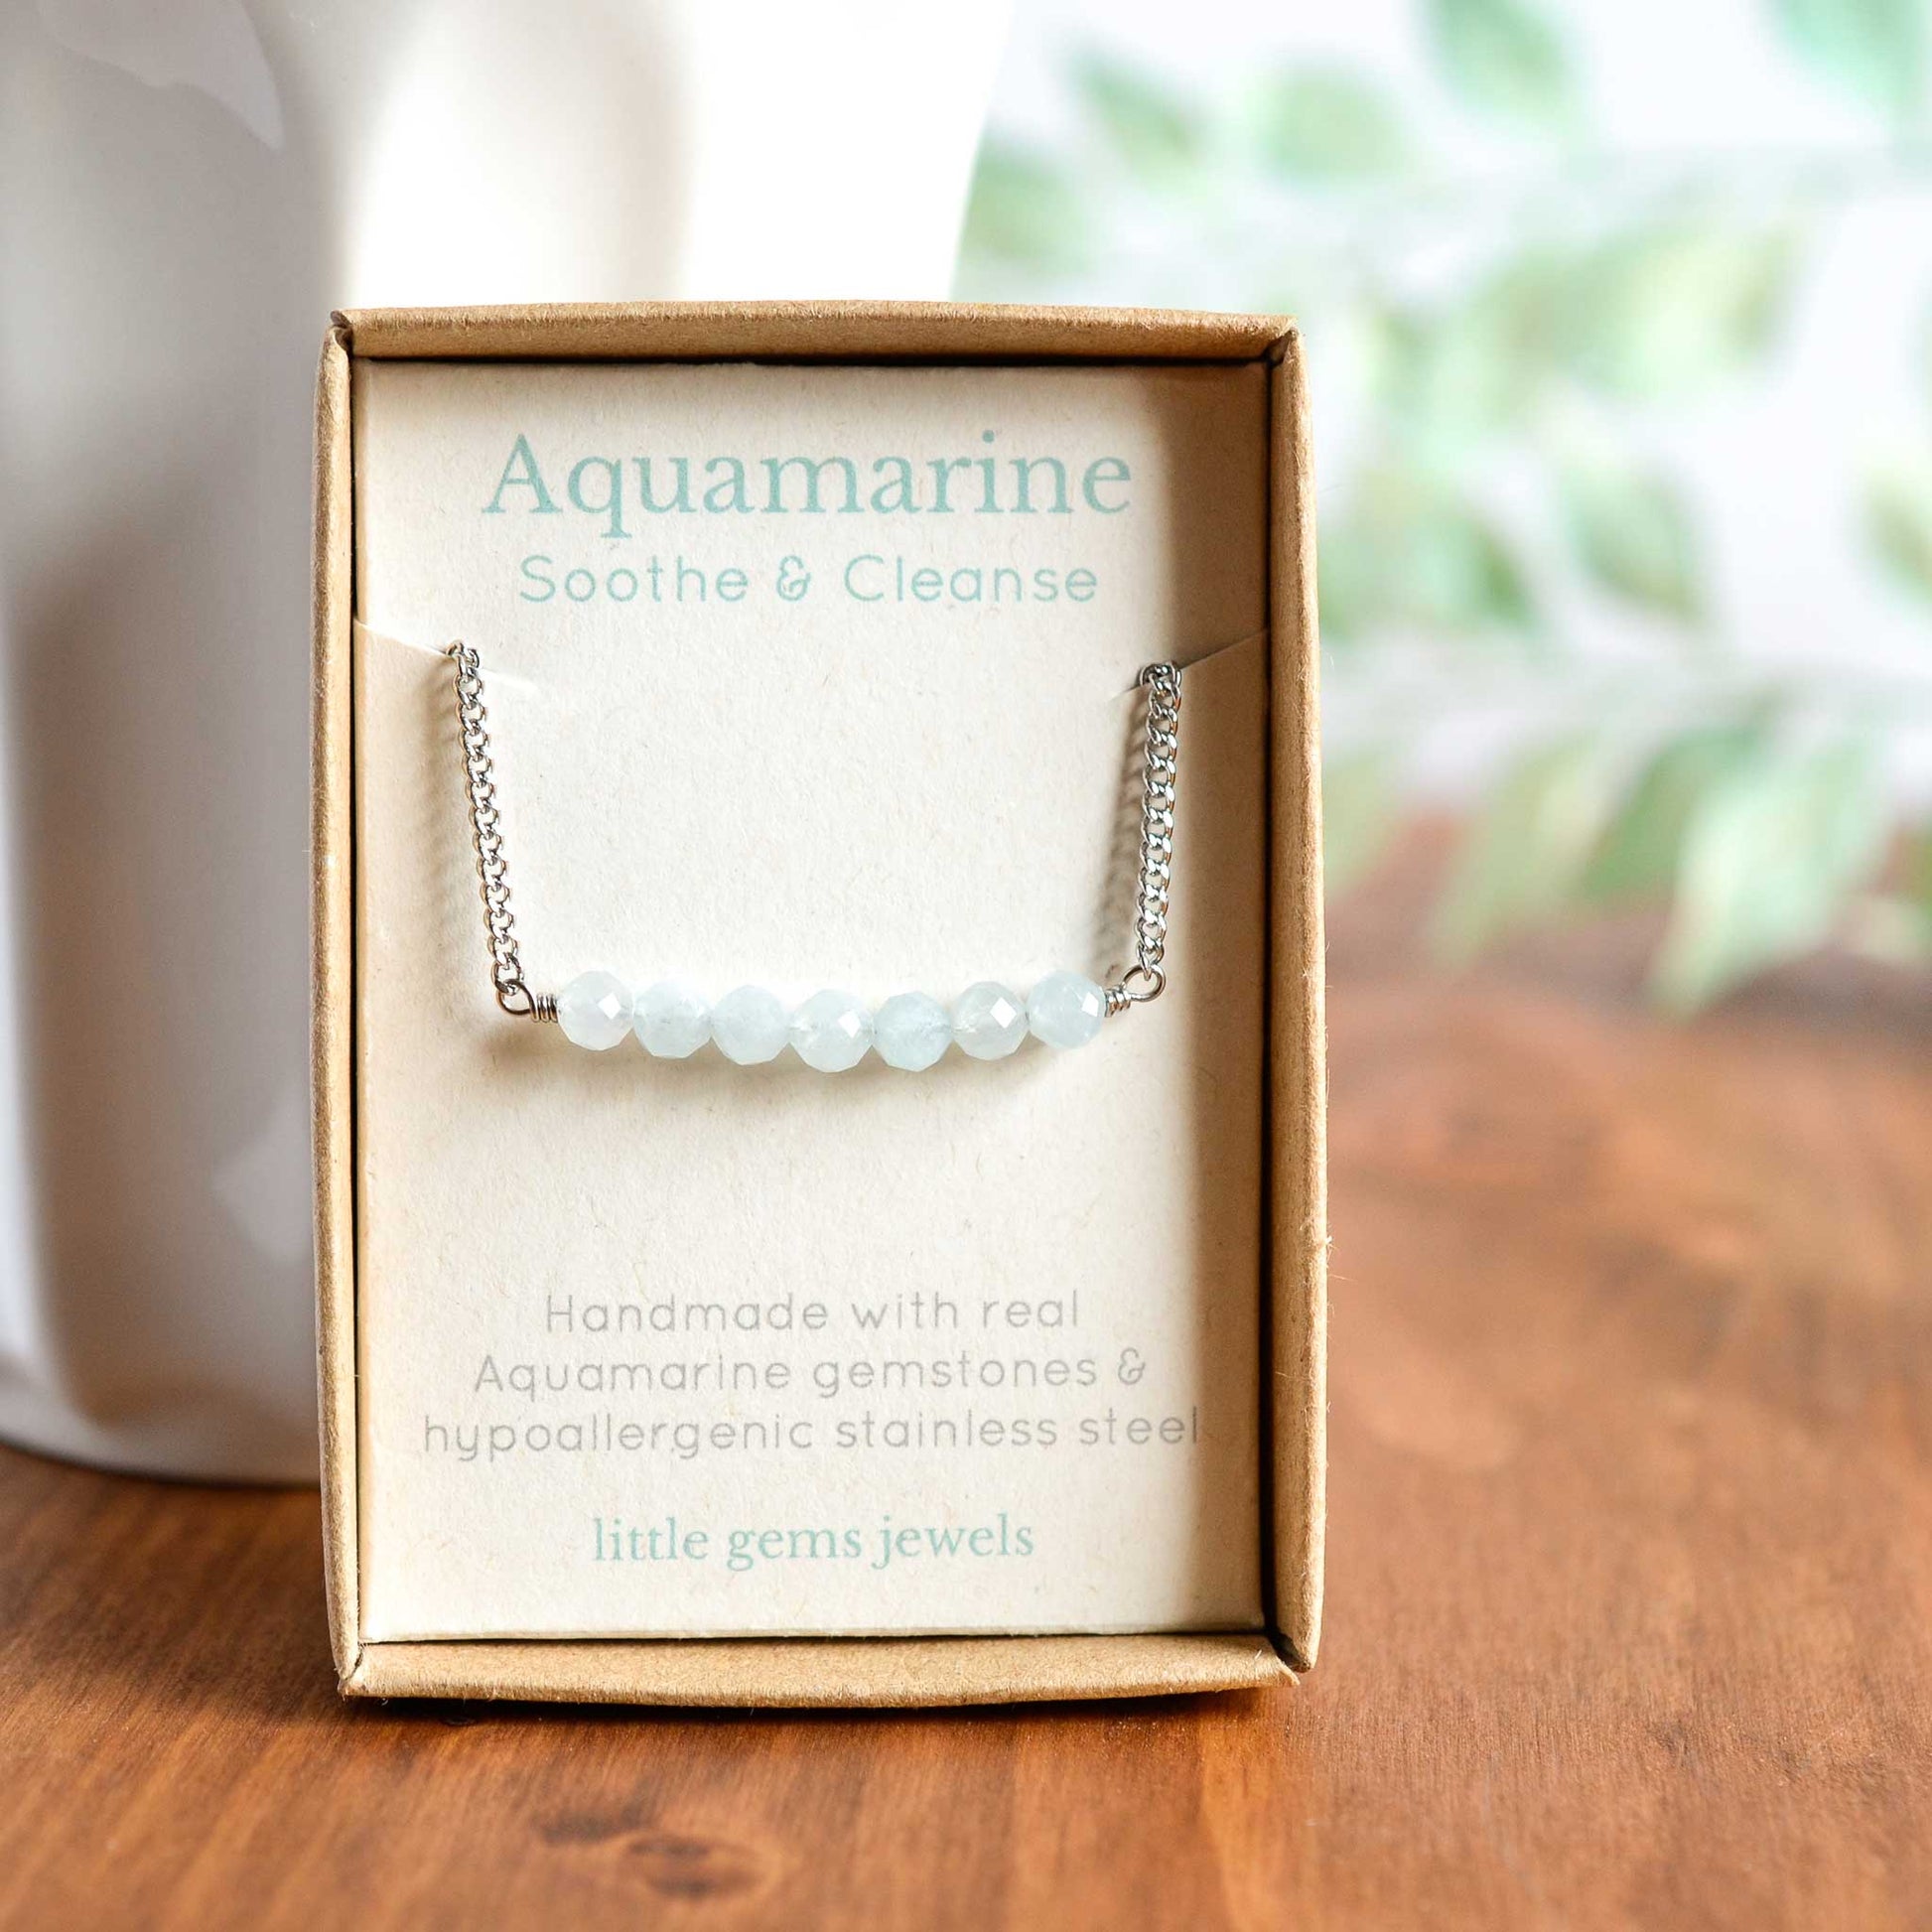 Aquamarine gemstone necklace in eco friendly gift box